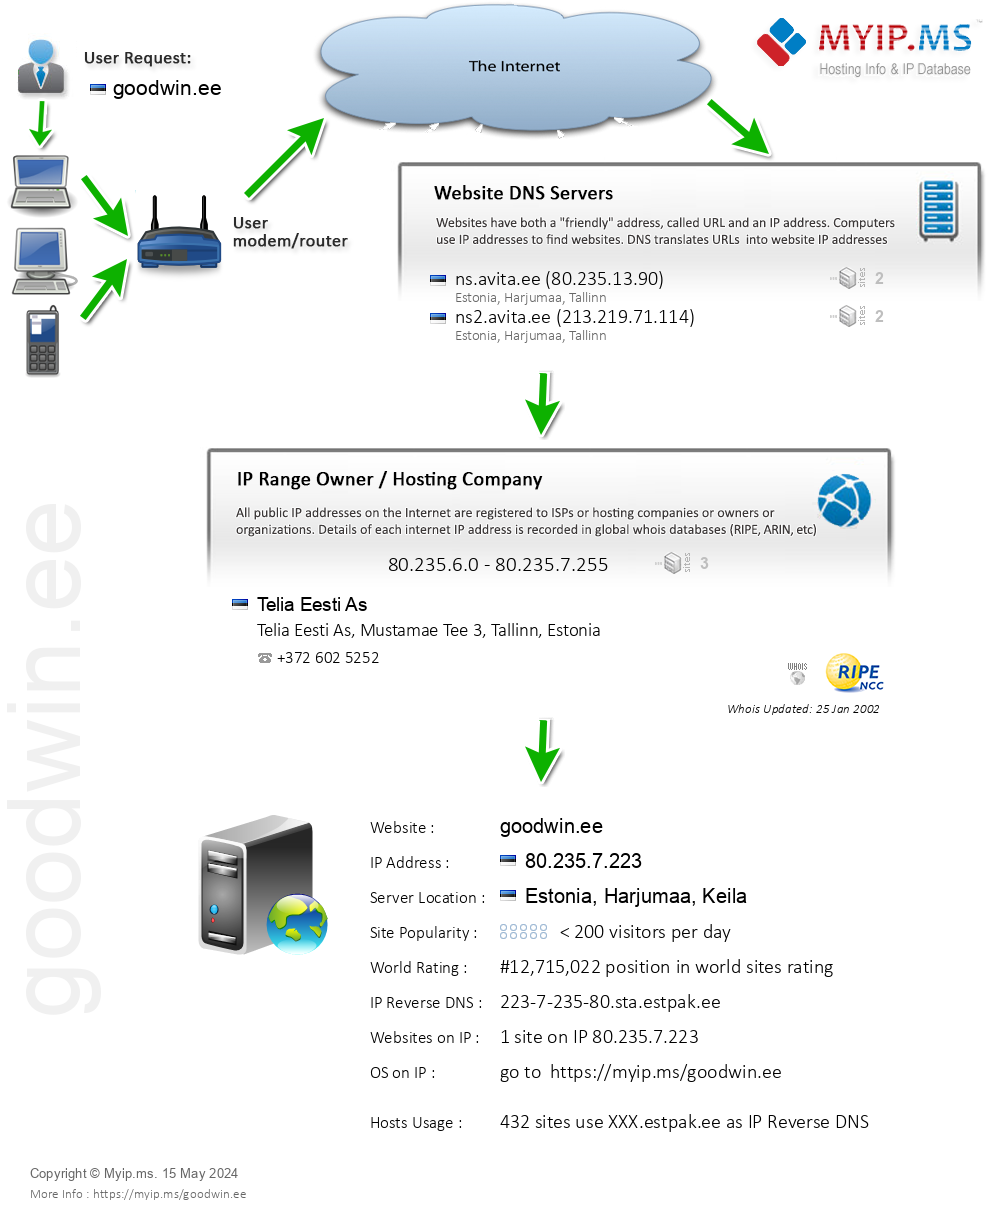 Goodwin.ee - Website Hosting Visual IP Diagram